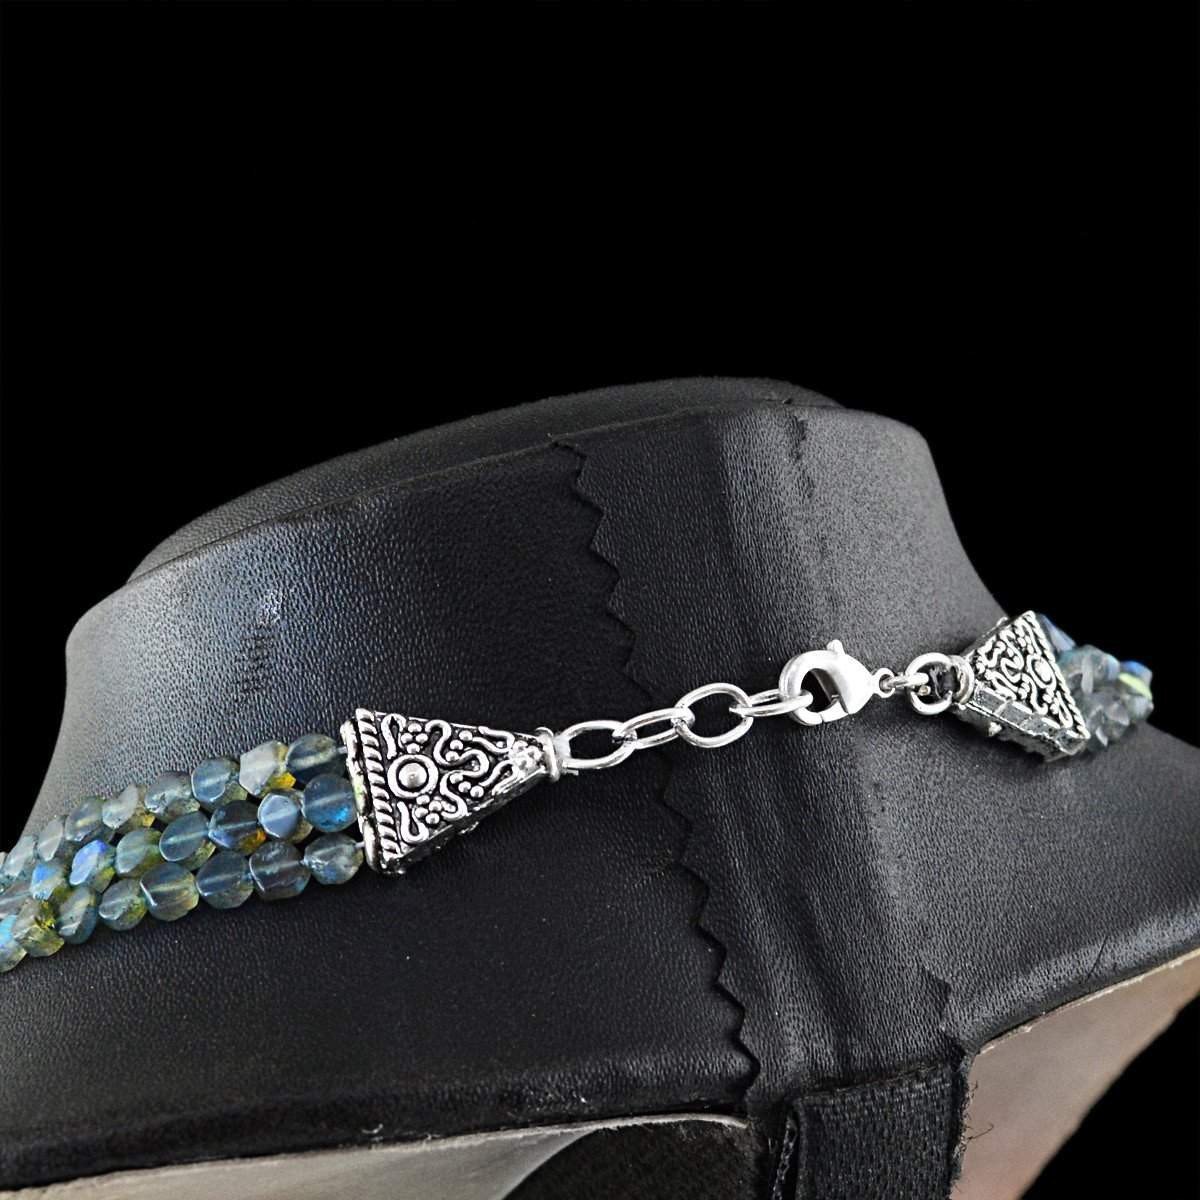 gemsmore:3 Strand Blue Flash Labradorite Necklace Natural Untreated Round Beads